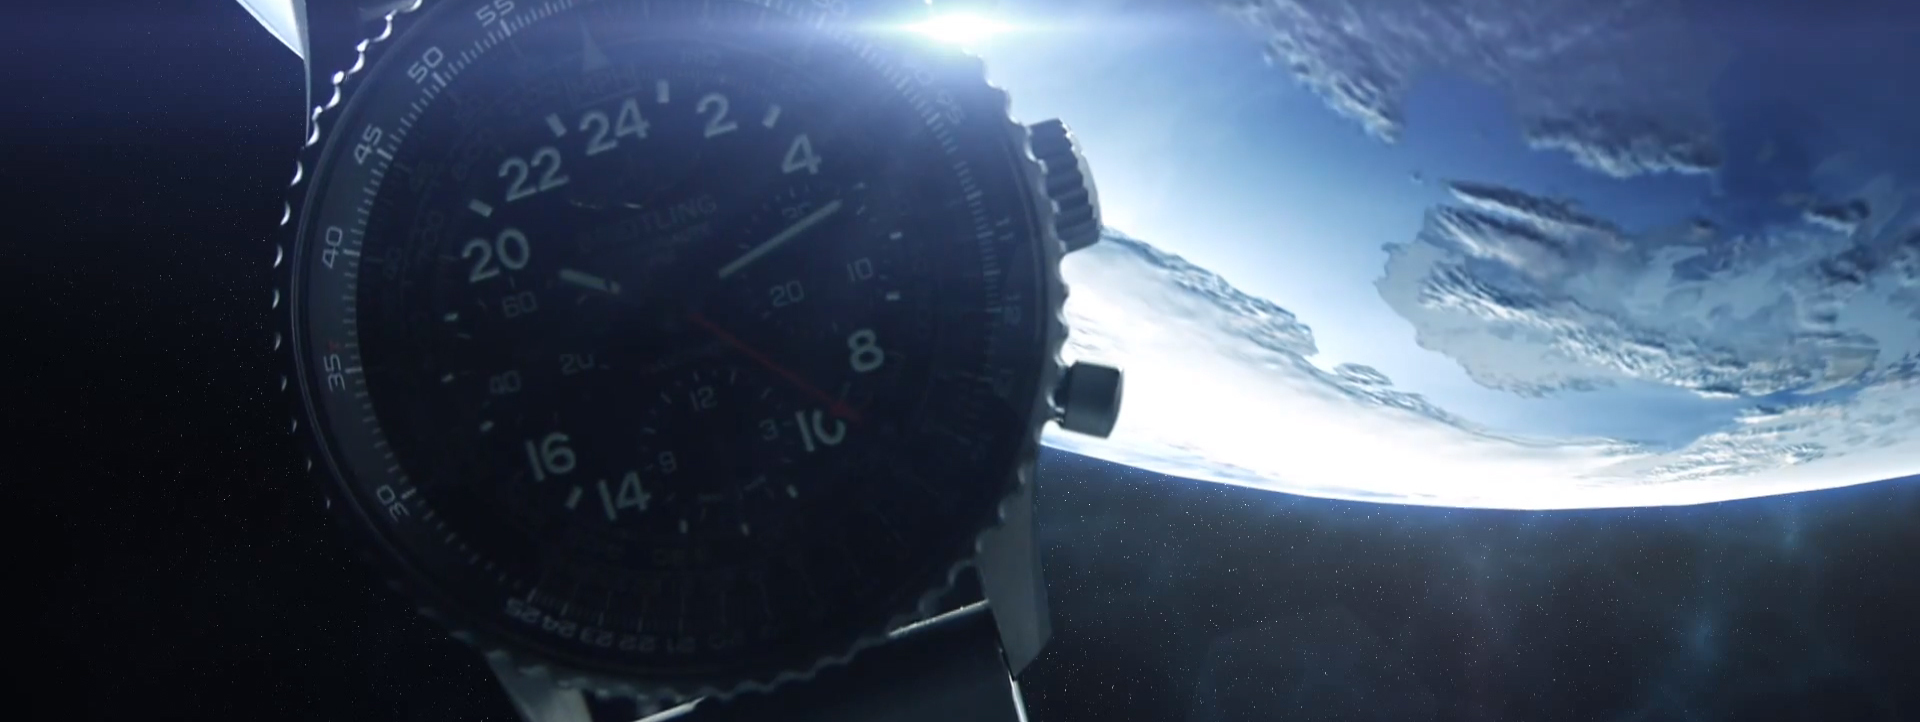 breitling Super Ocean Chronograph Men's Watch A1334102/BA82